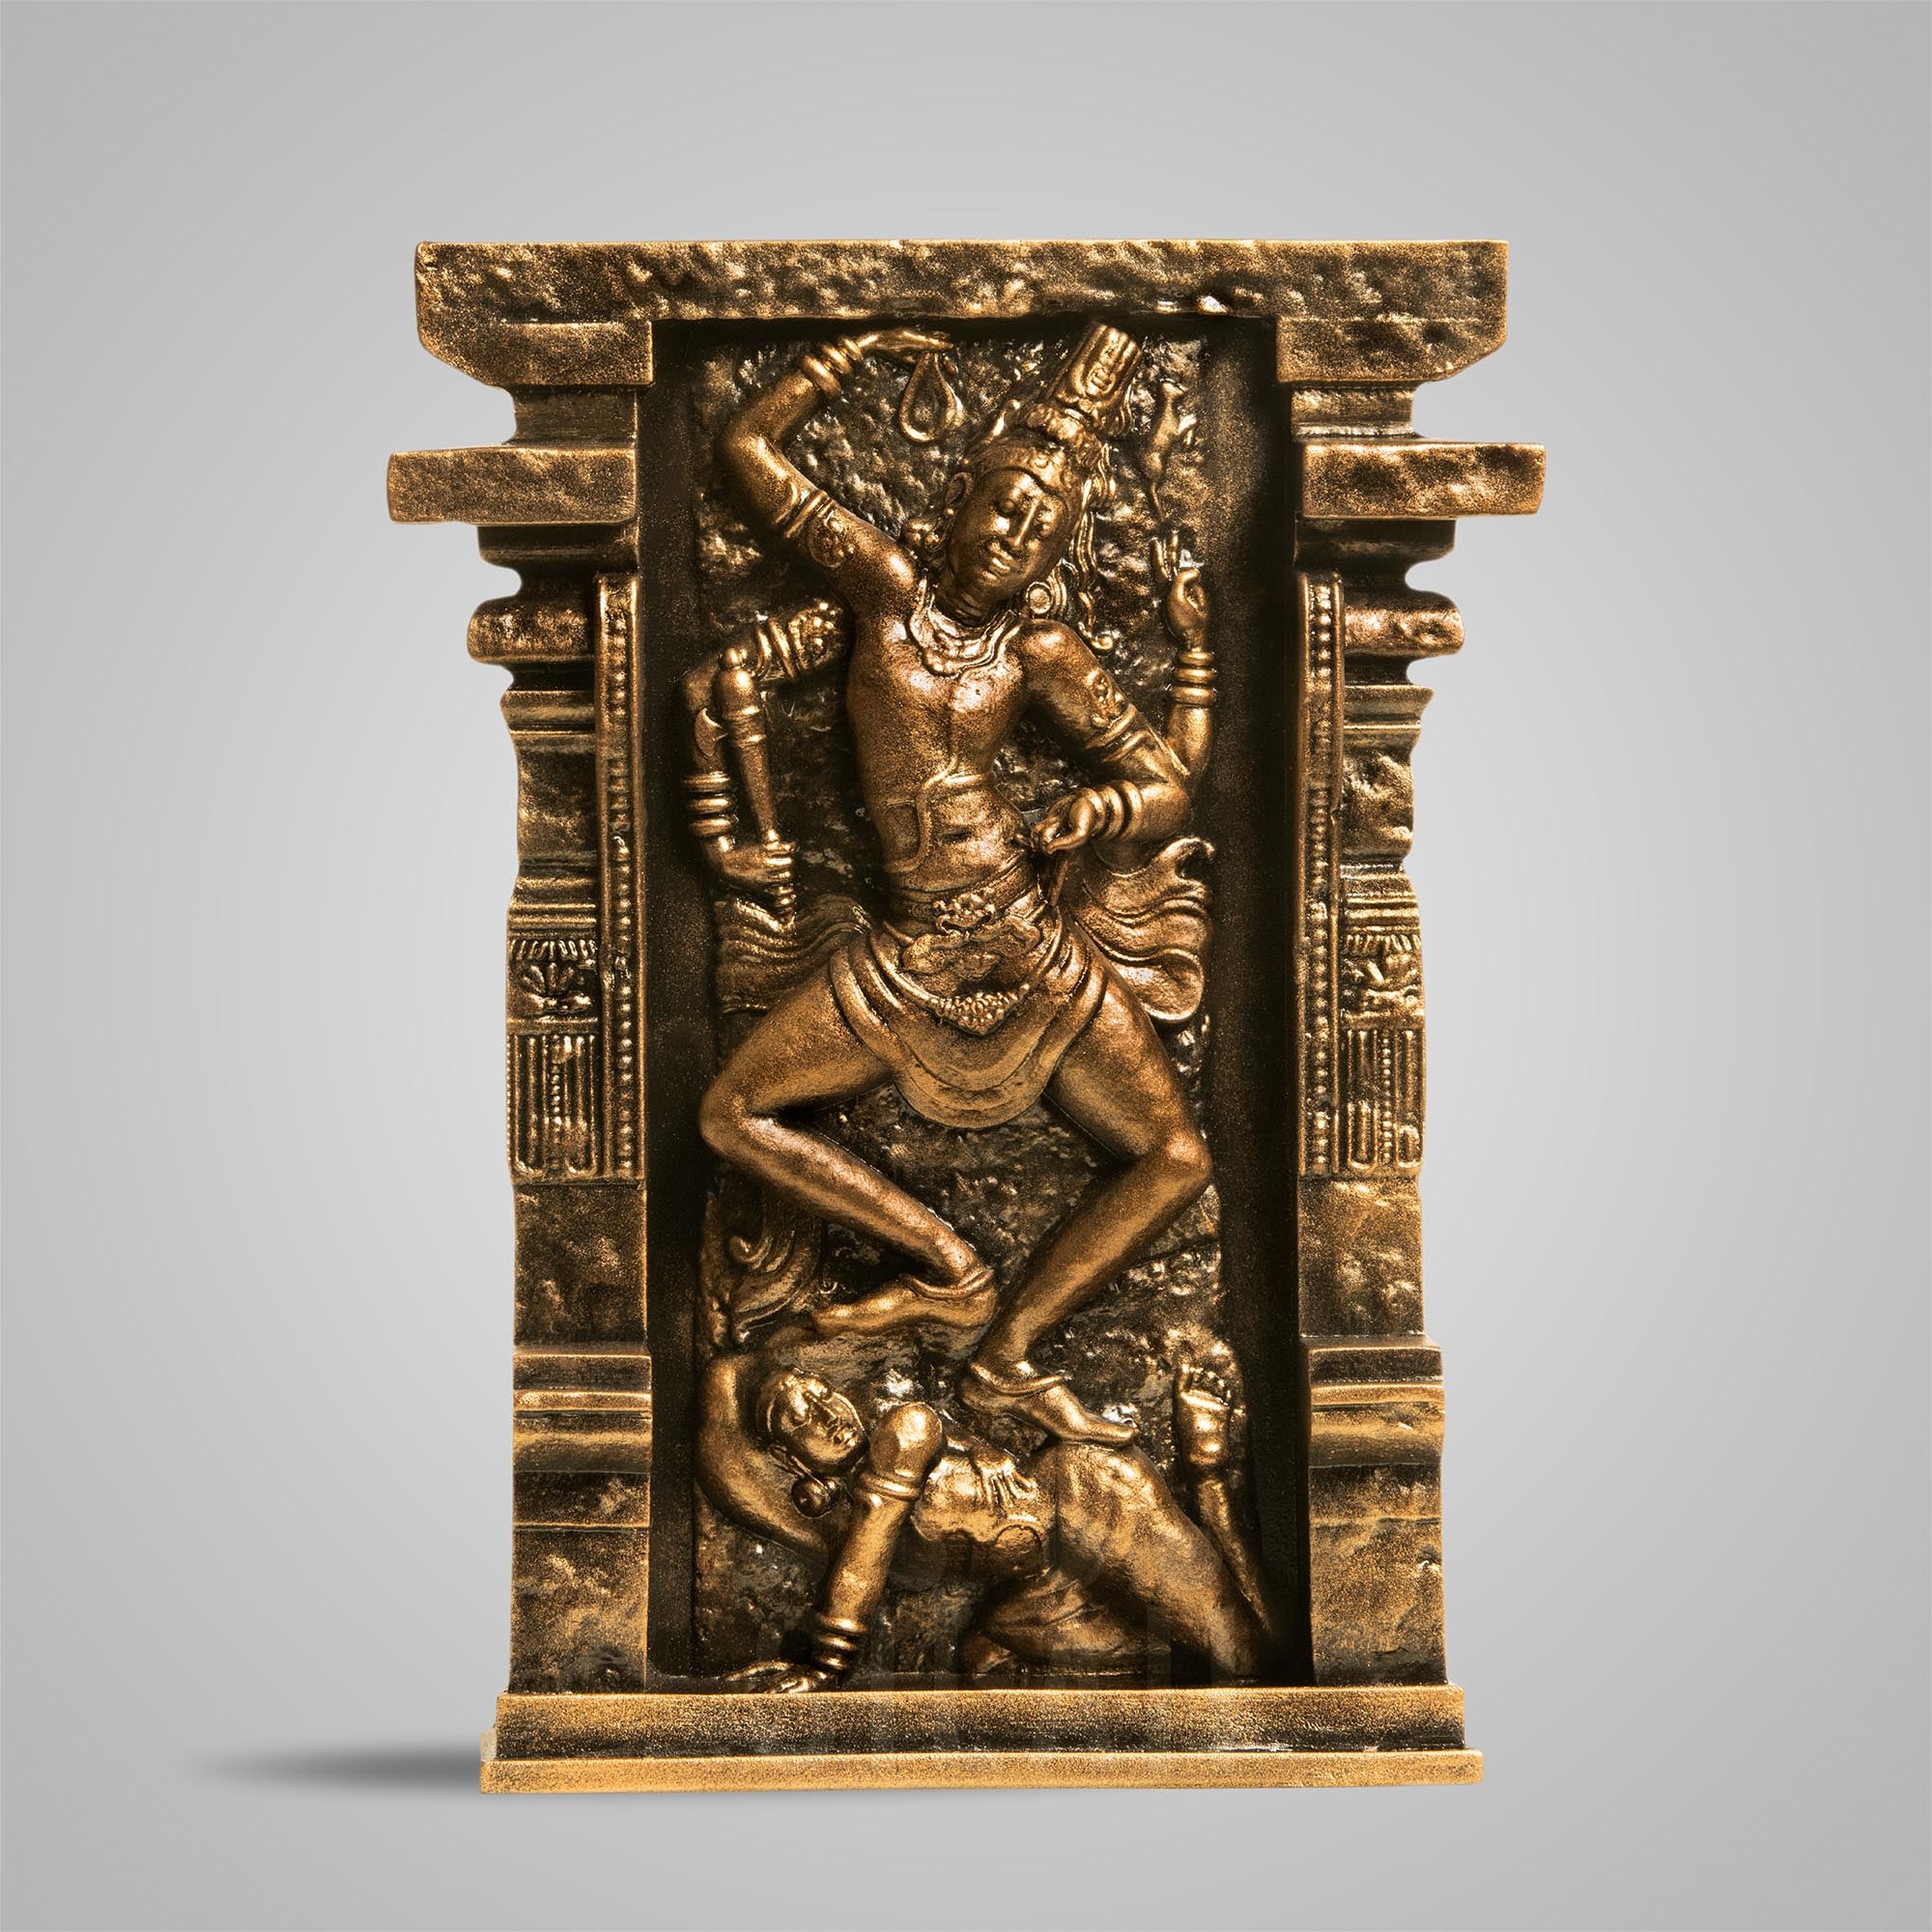 Replica of Kalari Sculpture from Moovar Temple